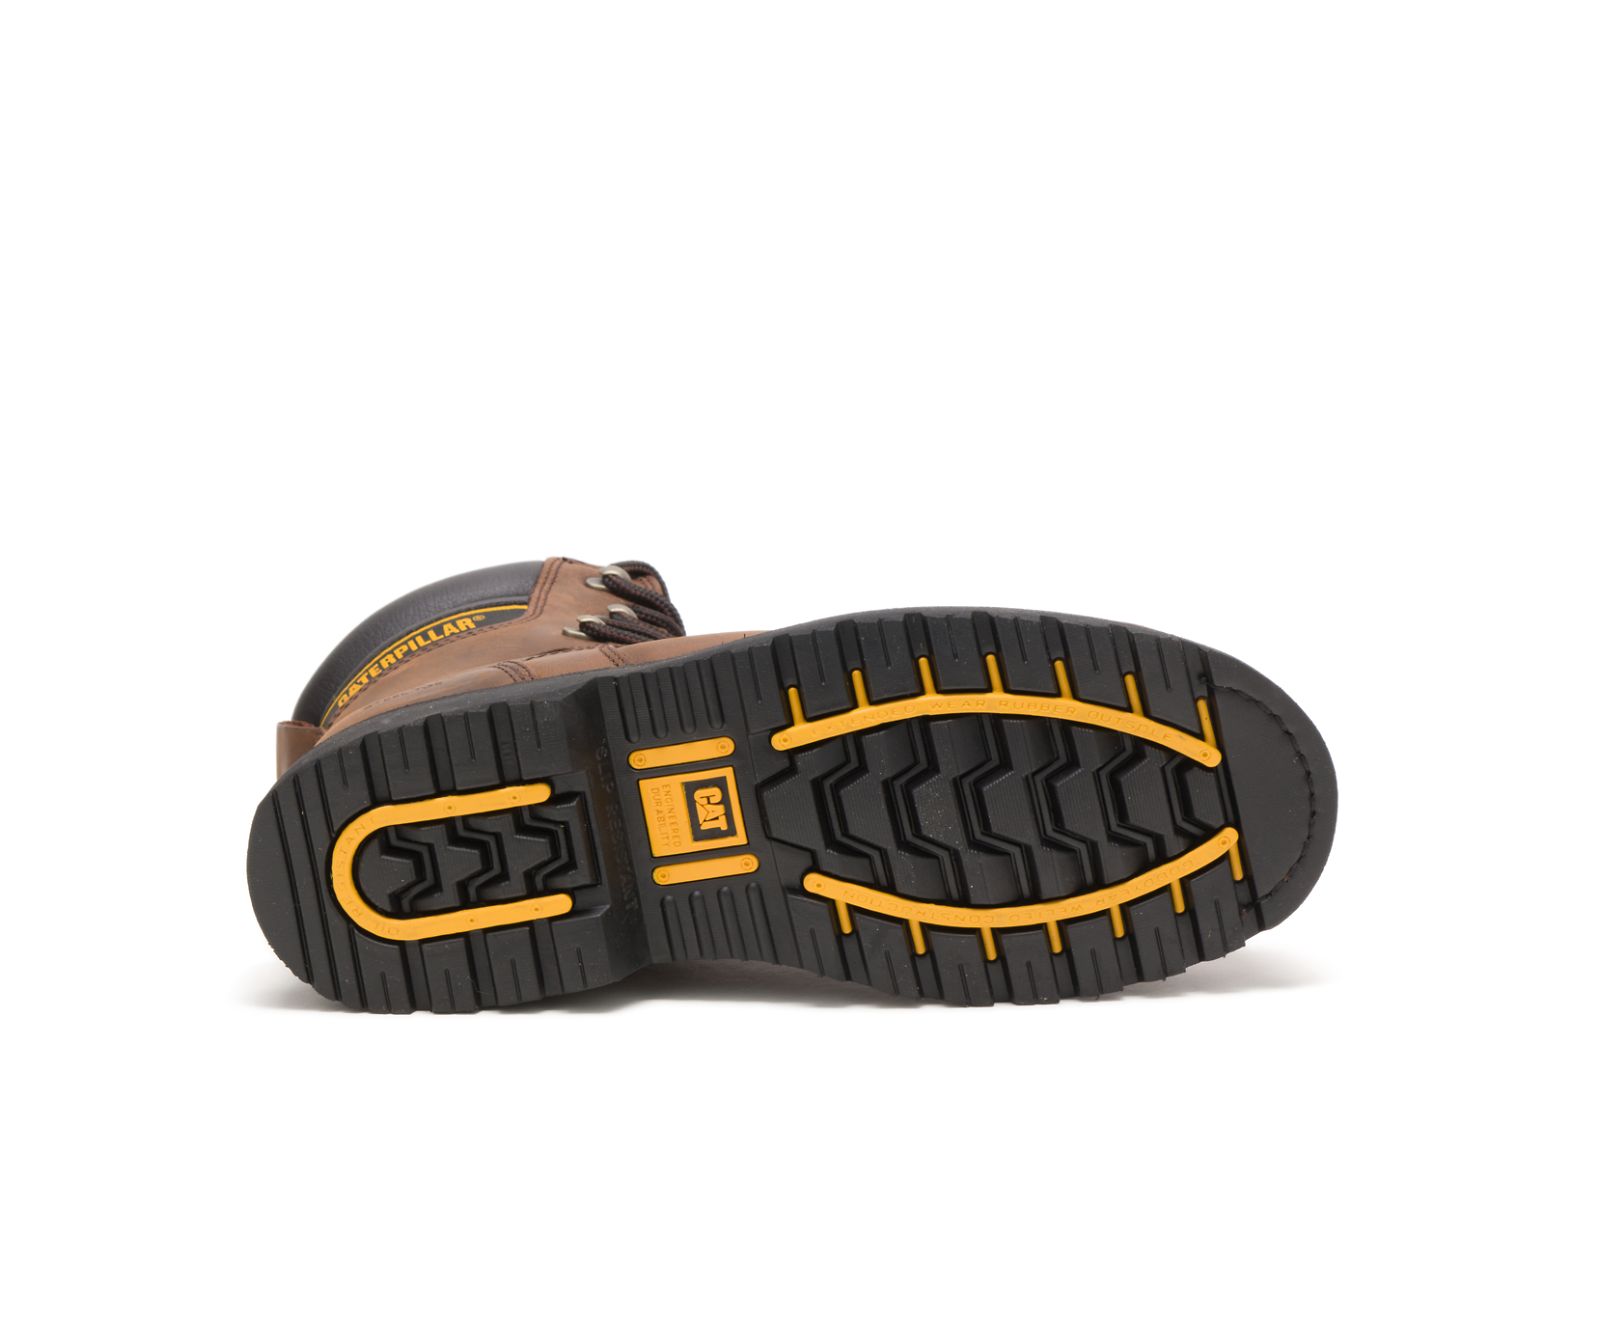 Salvo 8" Waterproof Steel Toe Thinsulate™ Work Boots